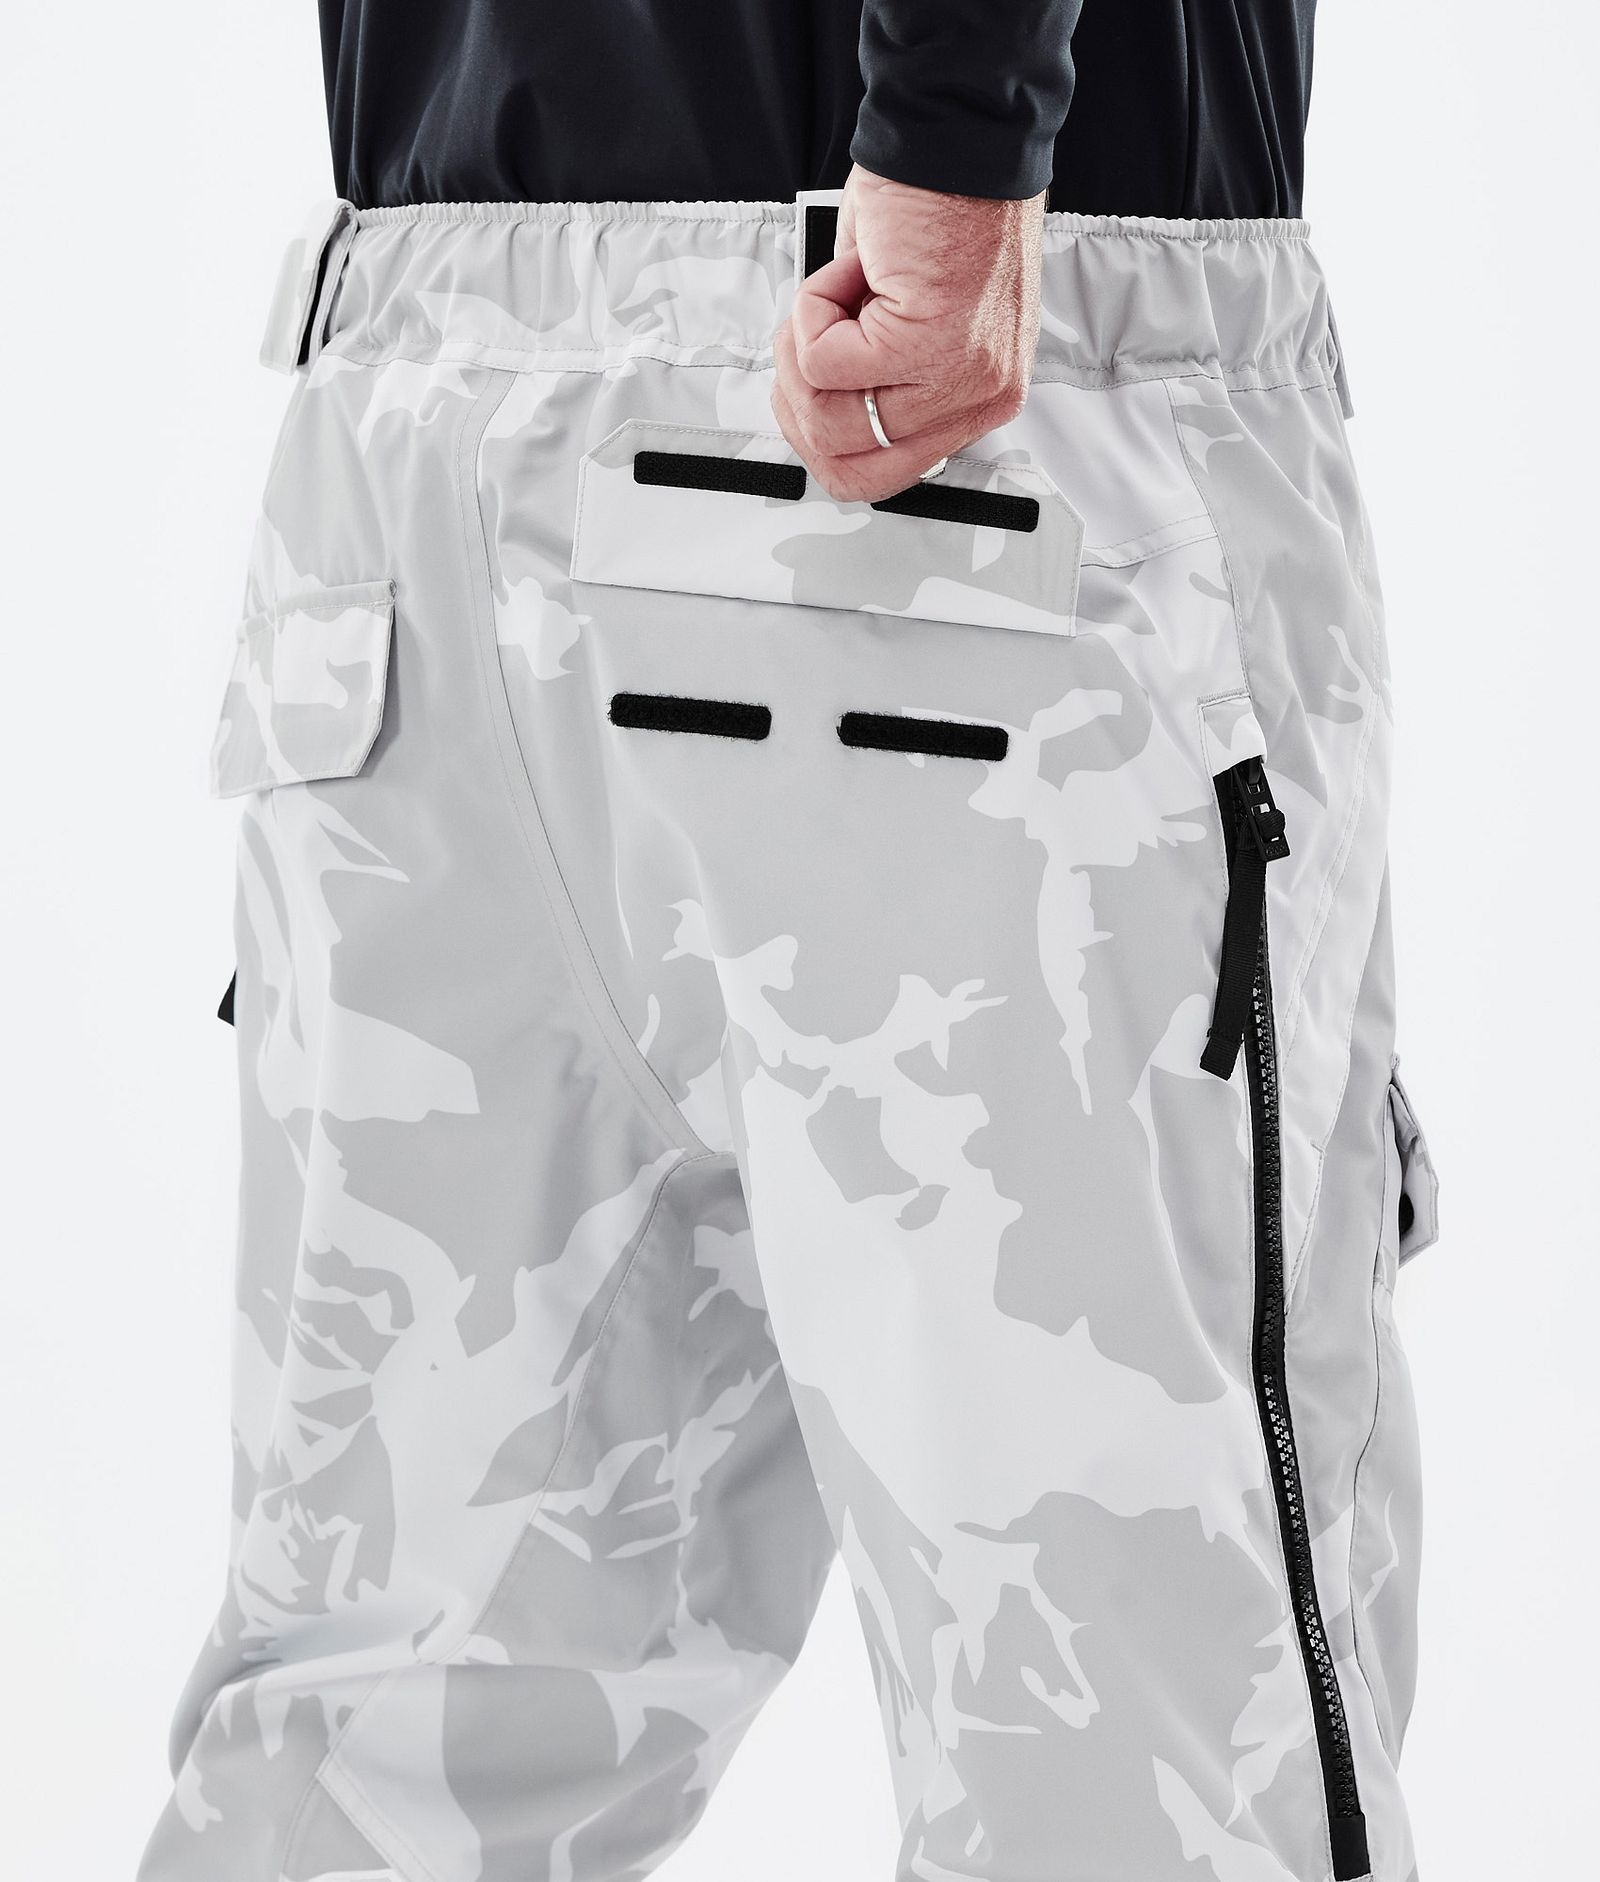 Dope Antek 2022 Pantalones Snowboard Hombre Grey Camo